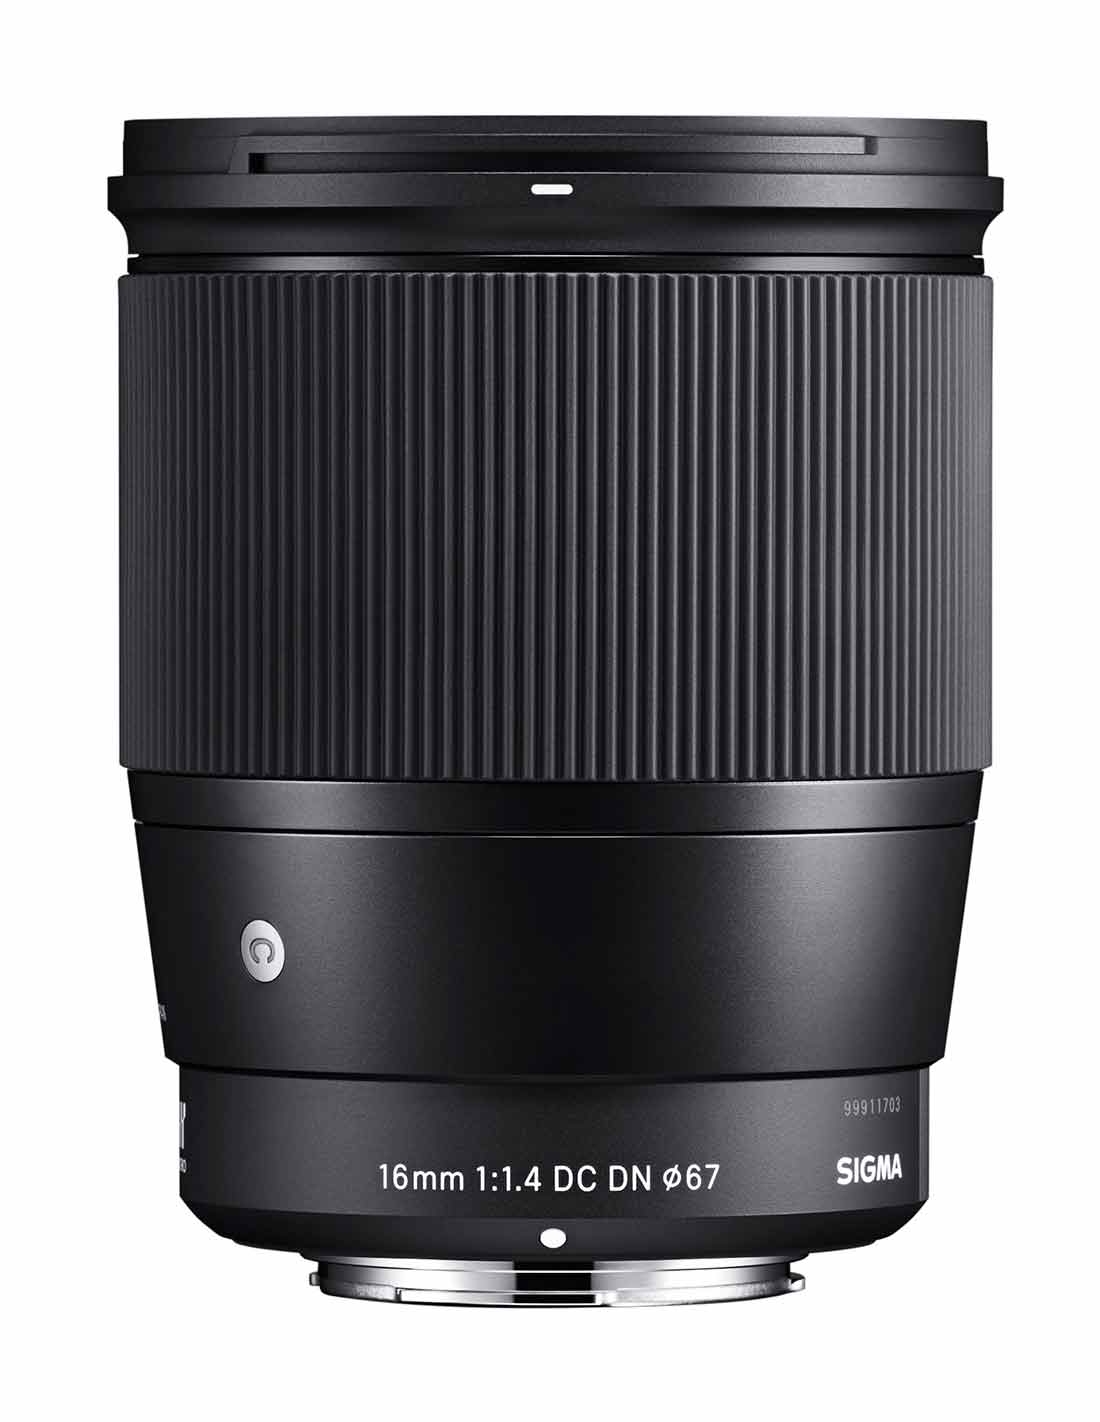 Sigma 16mm f/1.4 DC DN for Sony E Mount Review - Dan Pandrea